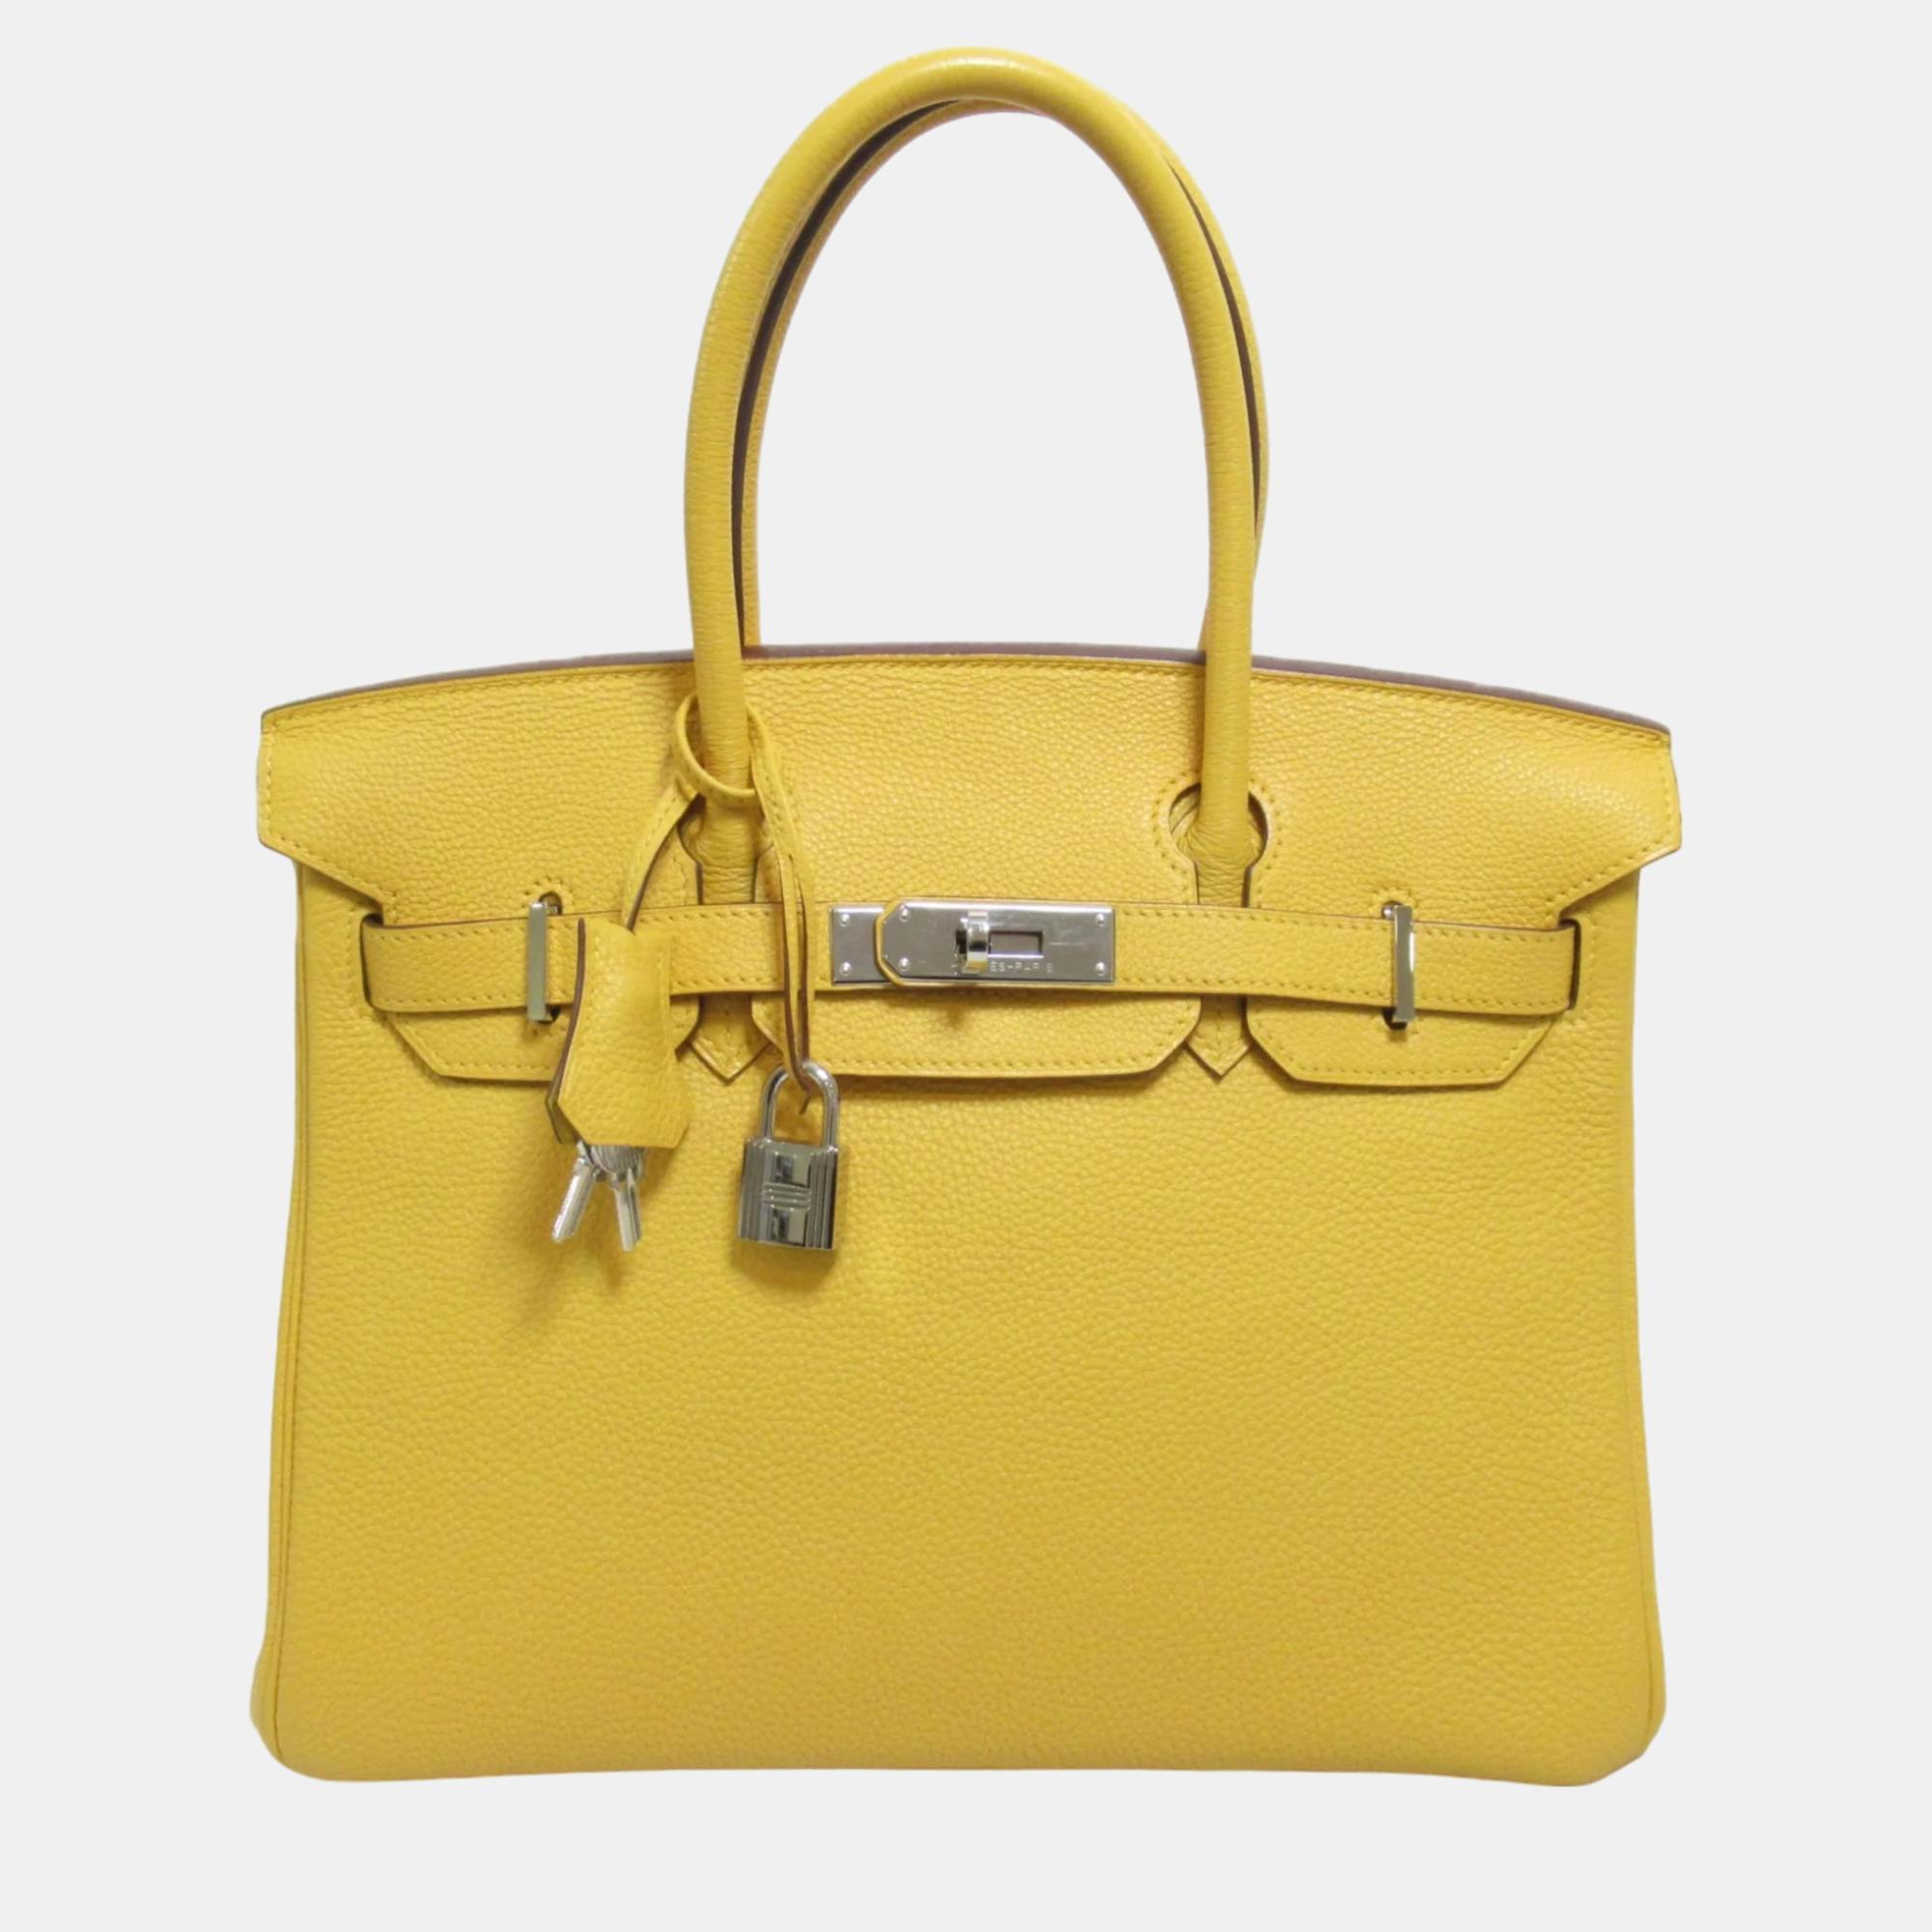 Hermes yellow togo leather birkin 30 tote bag